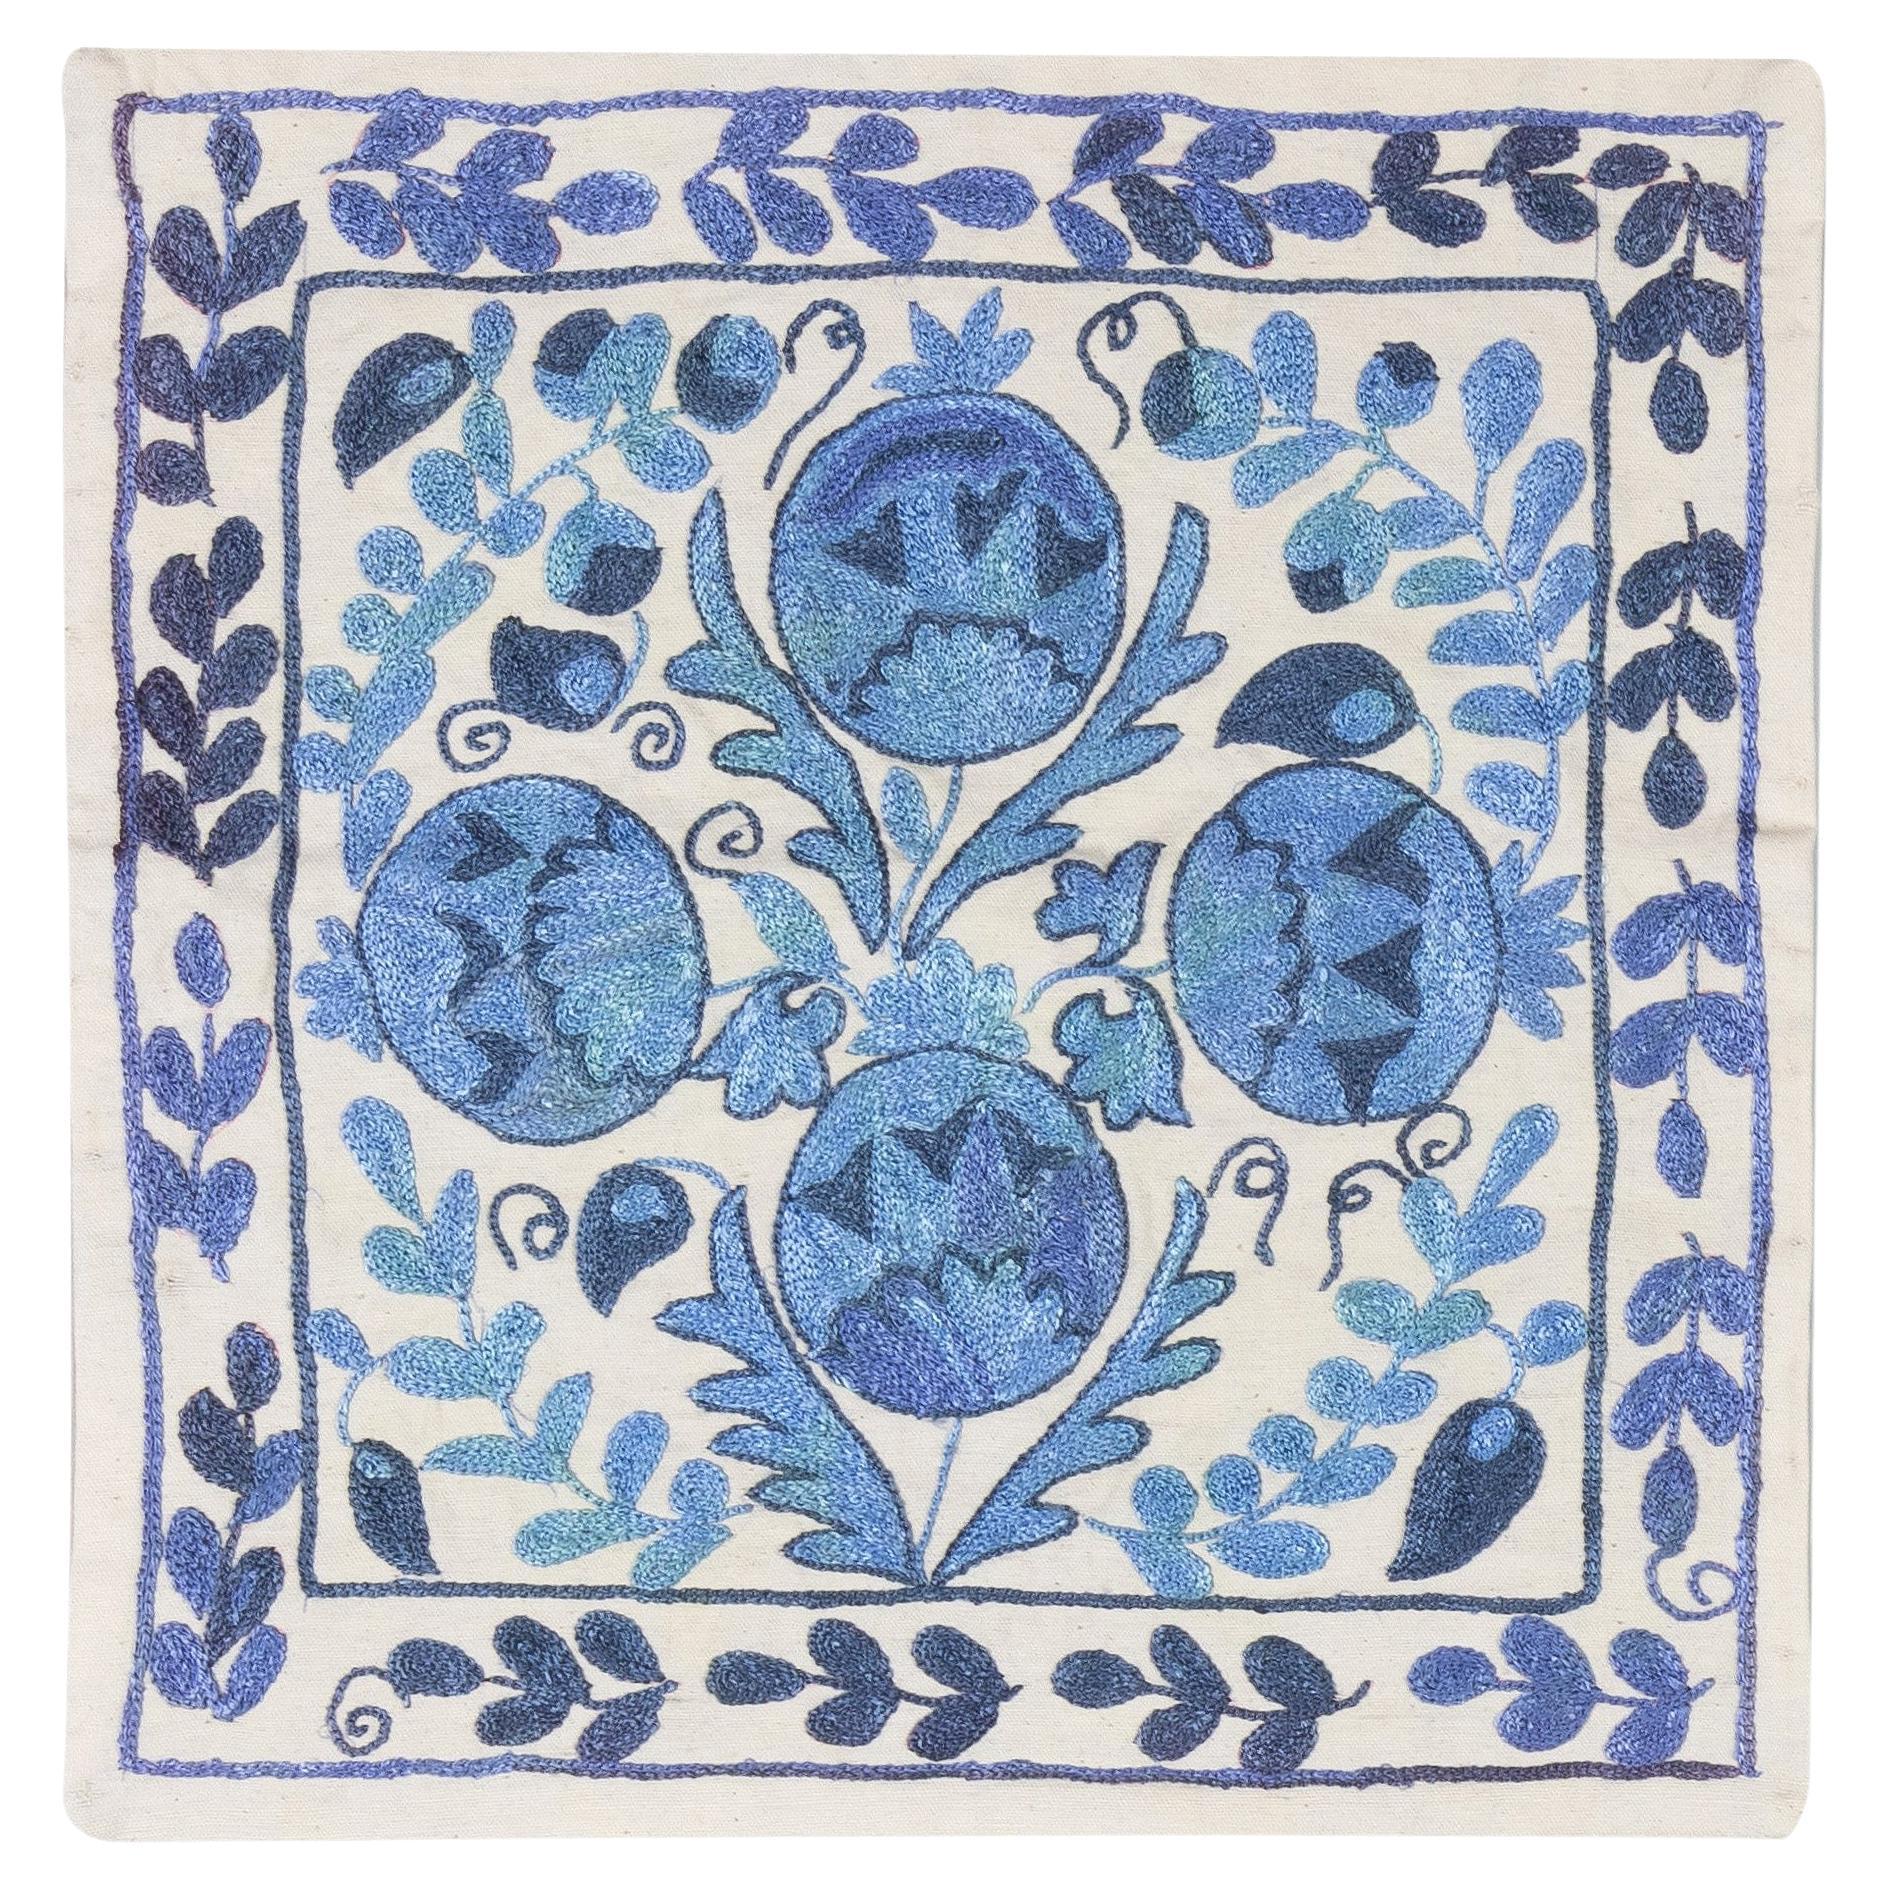 17"x18" New Uzbek Silk Embroidered Suzani Cushion Cover in Cream & Blue Color